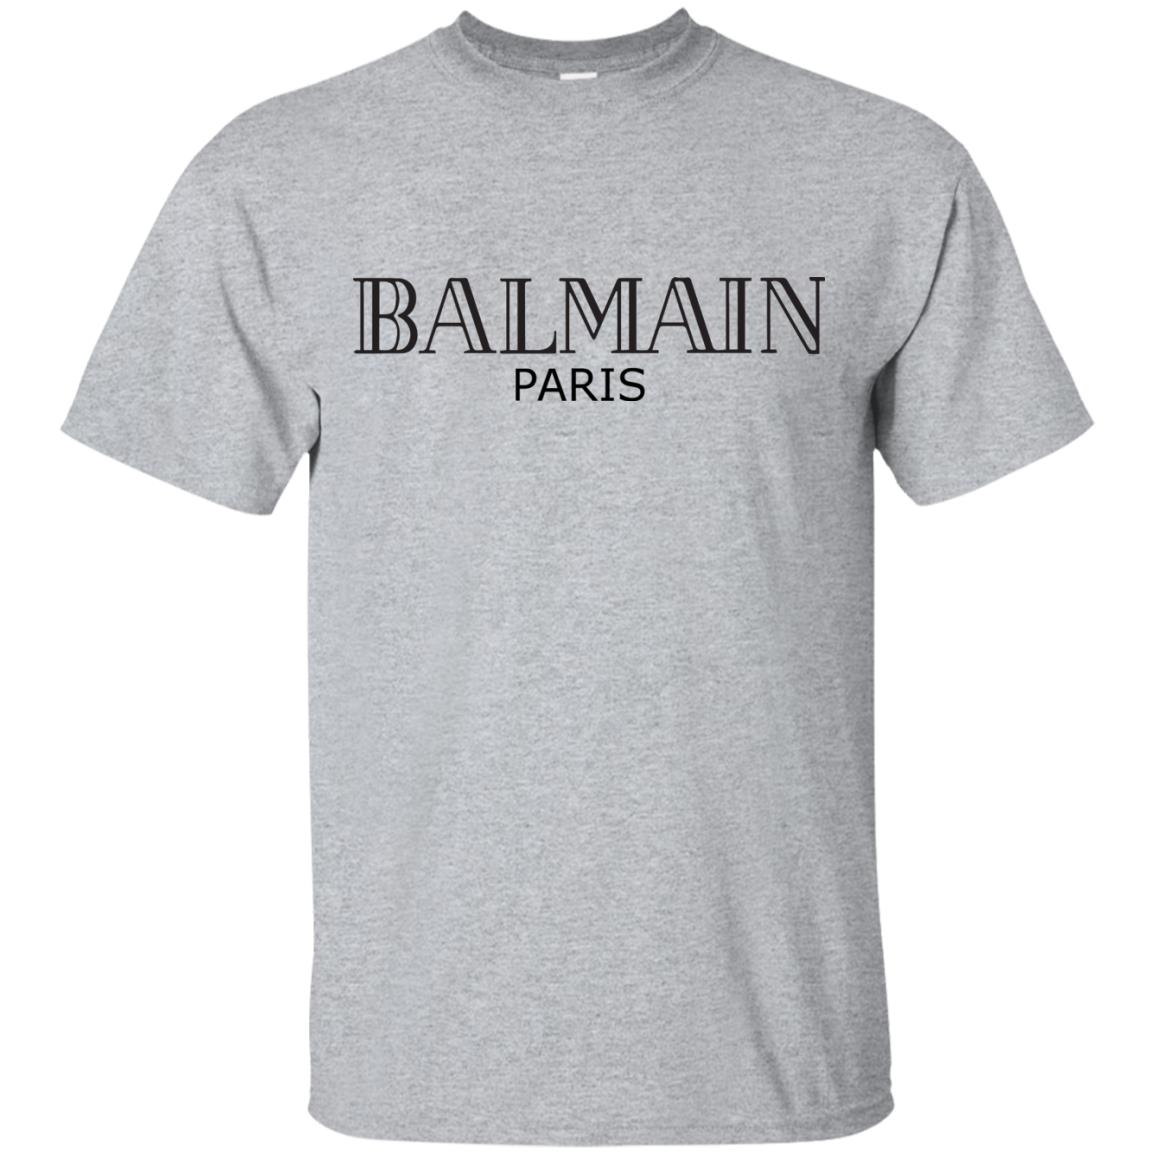 Balmain Paris t shirt, long sleeve, hoodie - RobinPlaceFabrics